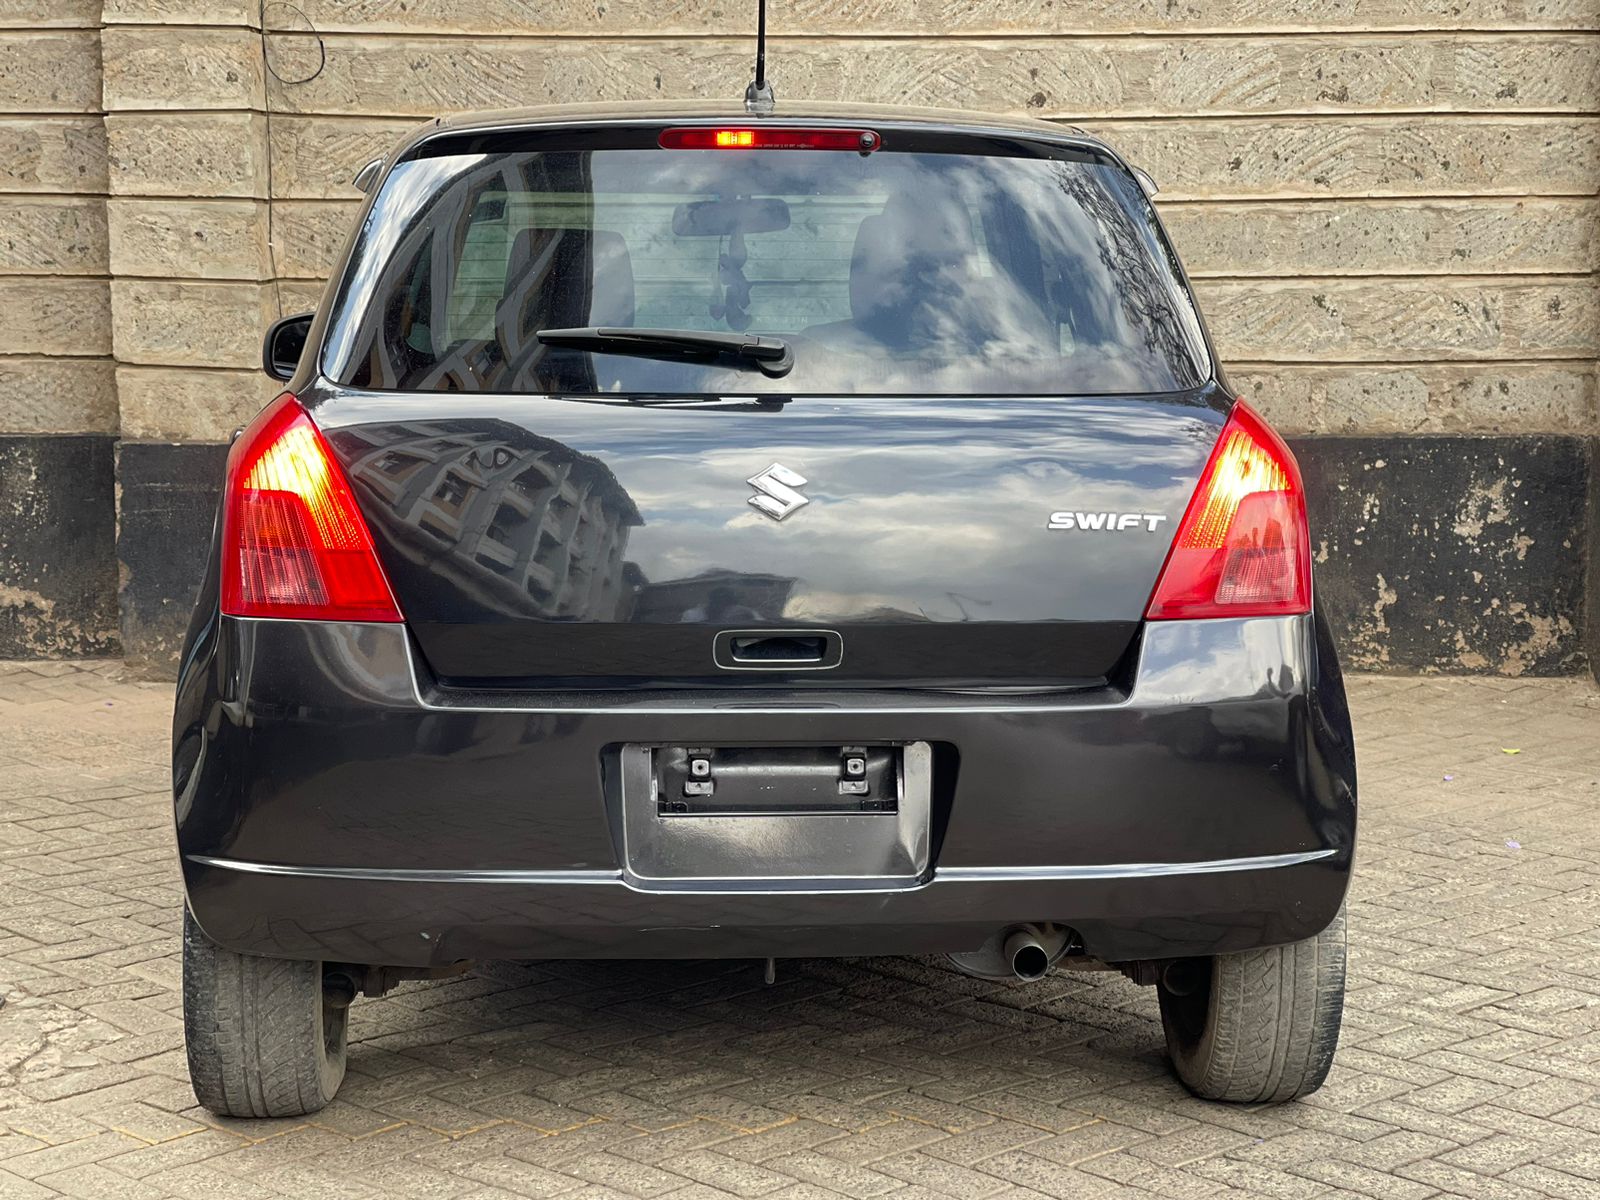 2008 Suzuki Swift - Quality cars under 700k Kenya